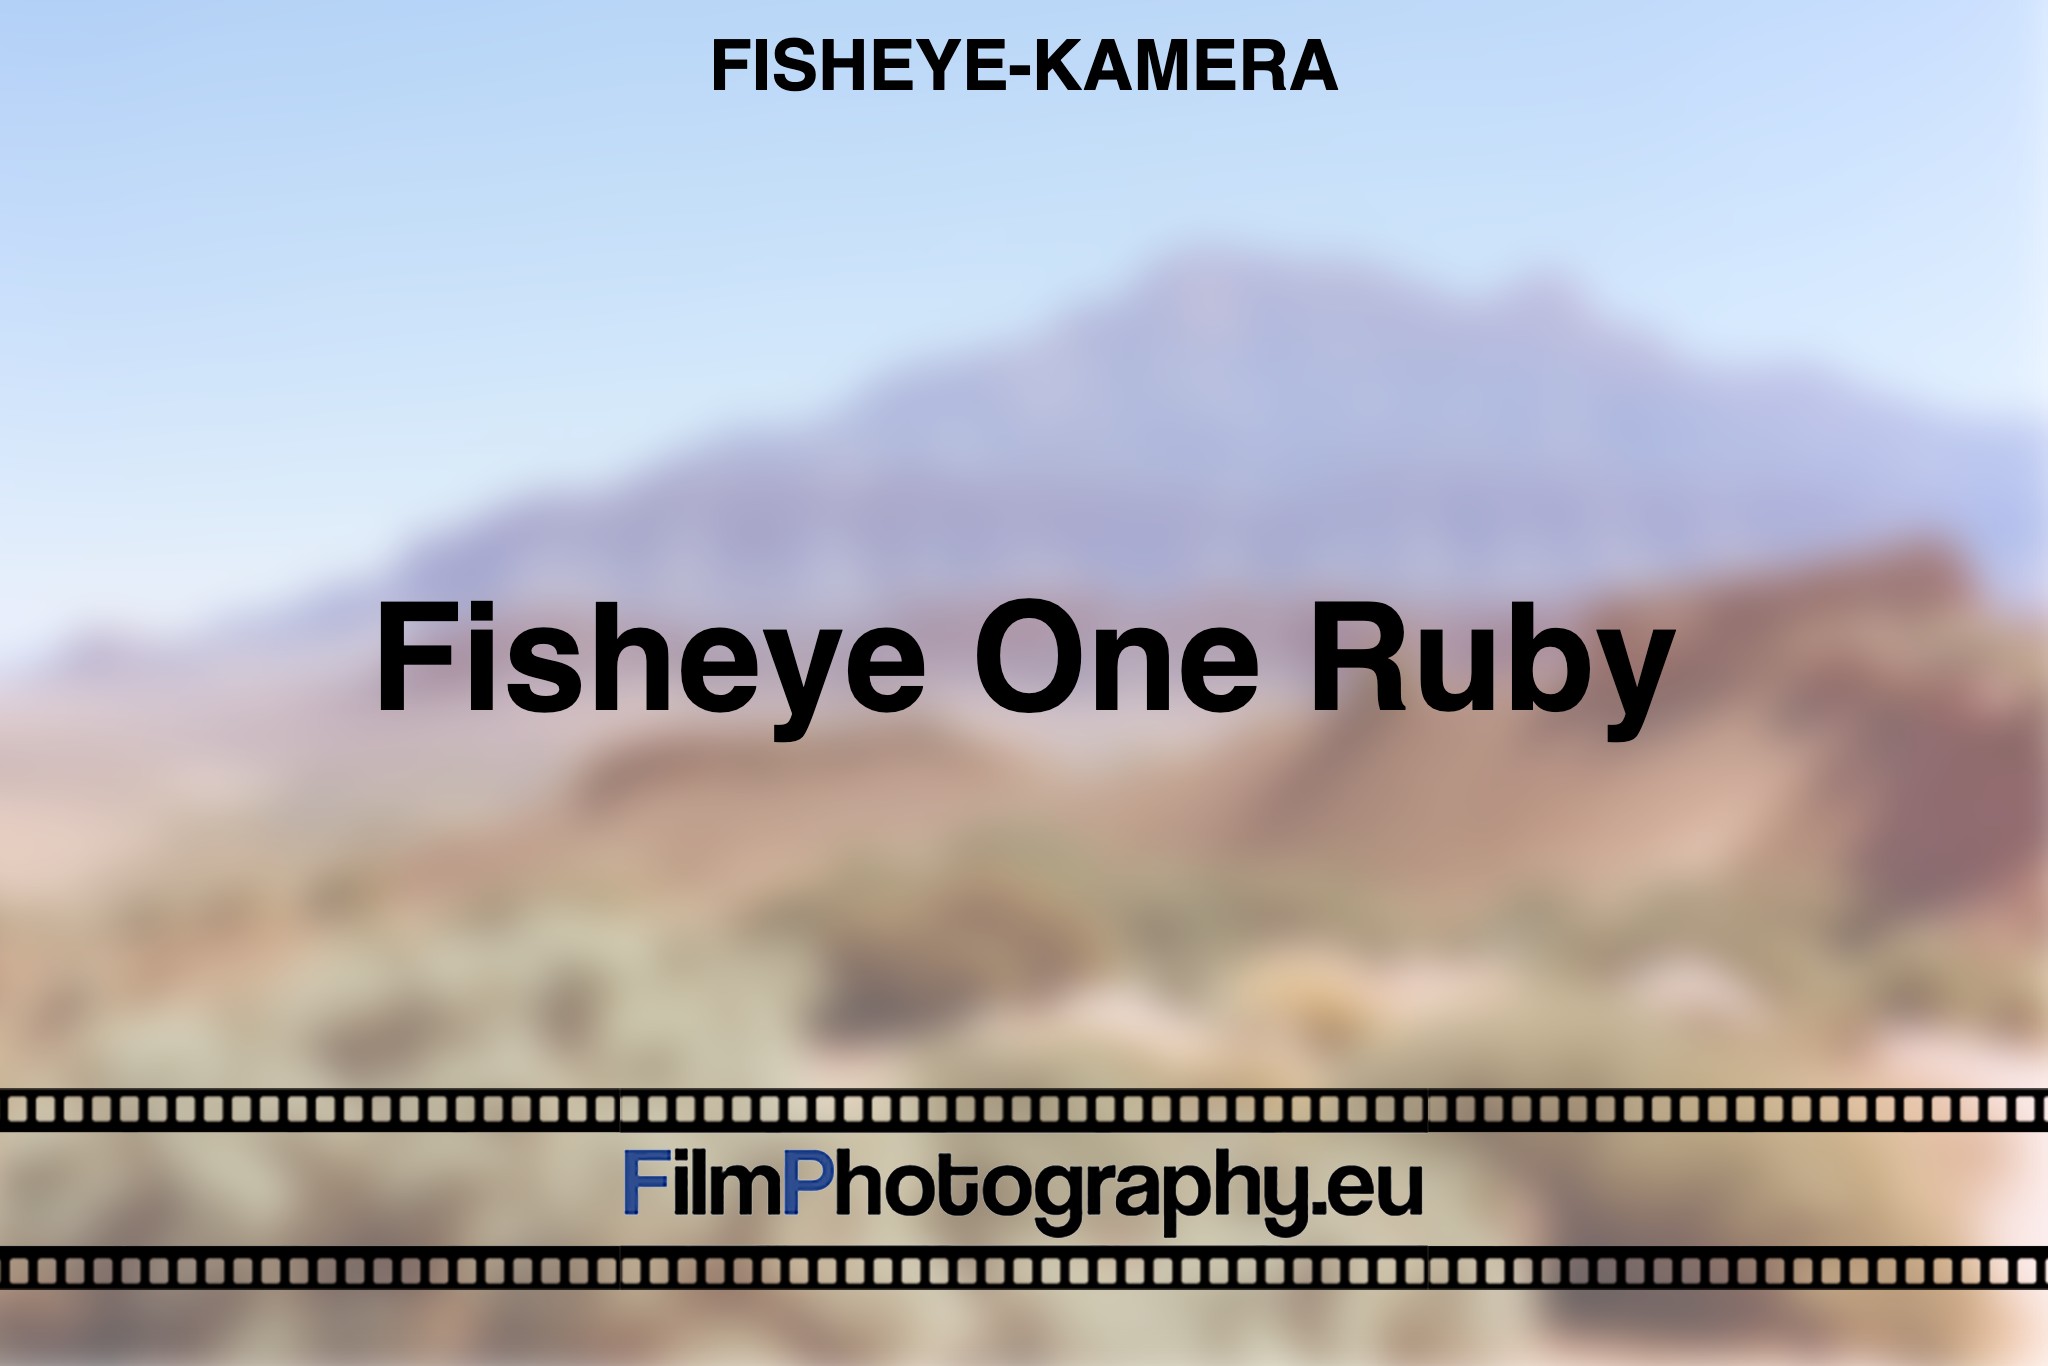 fisheye-one-ruby-fisheye-kamera-bnv